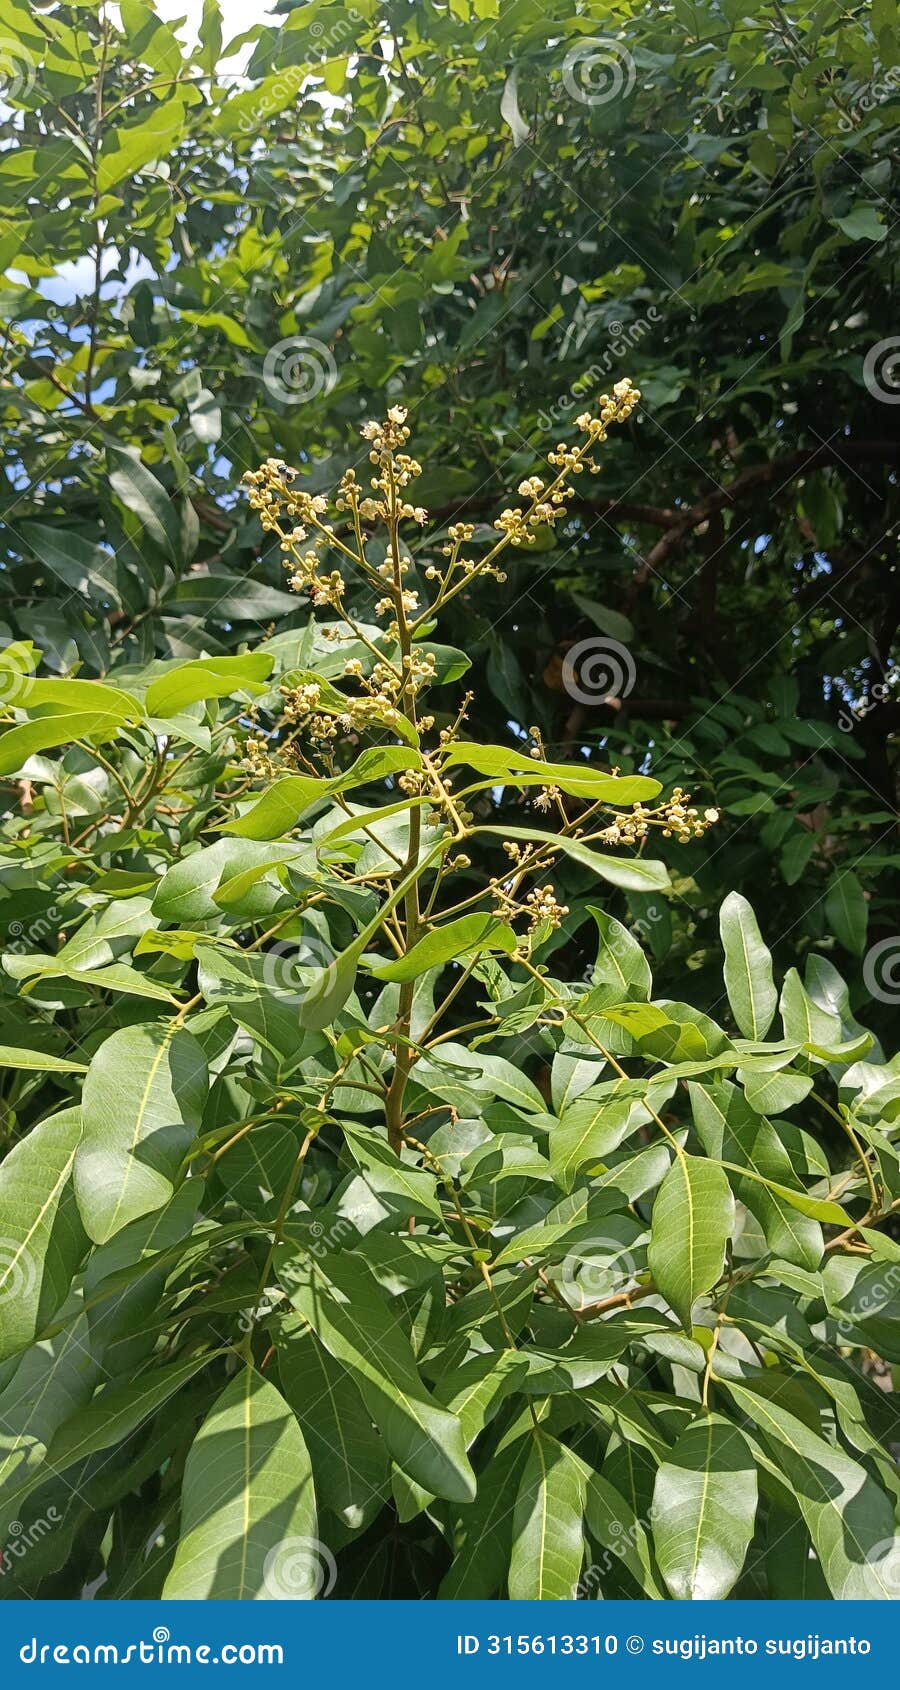 longan fruits in flower, very beutiful